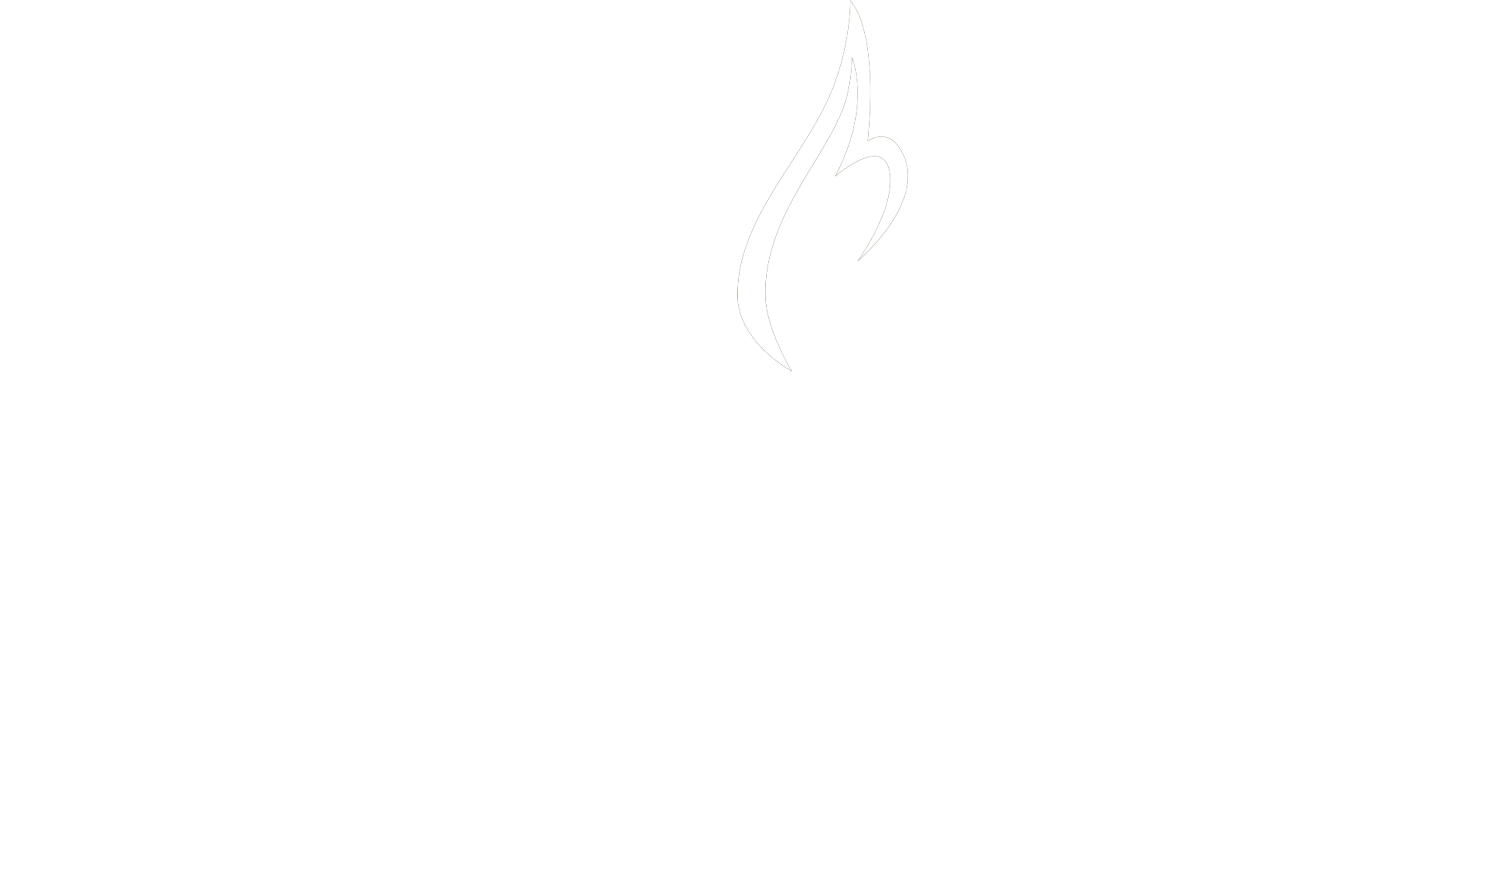 Breath of Life logo